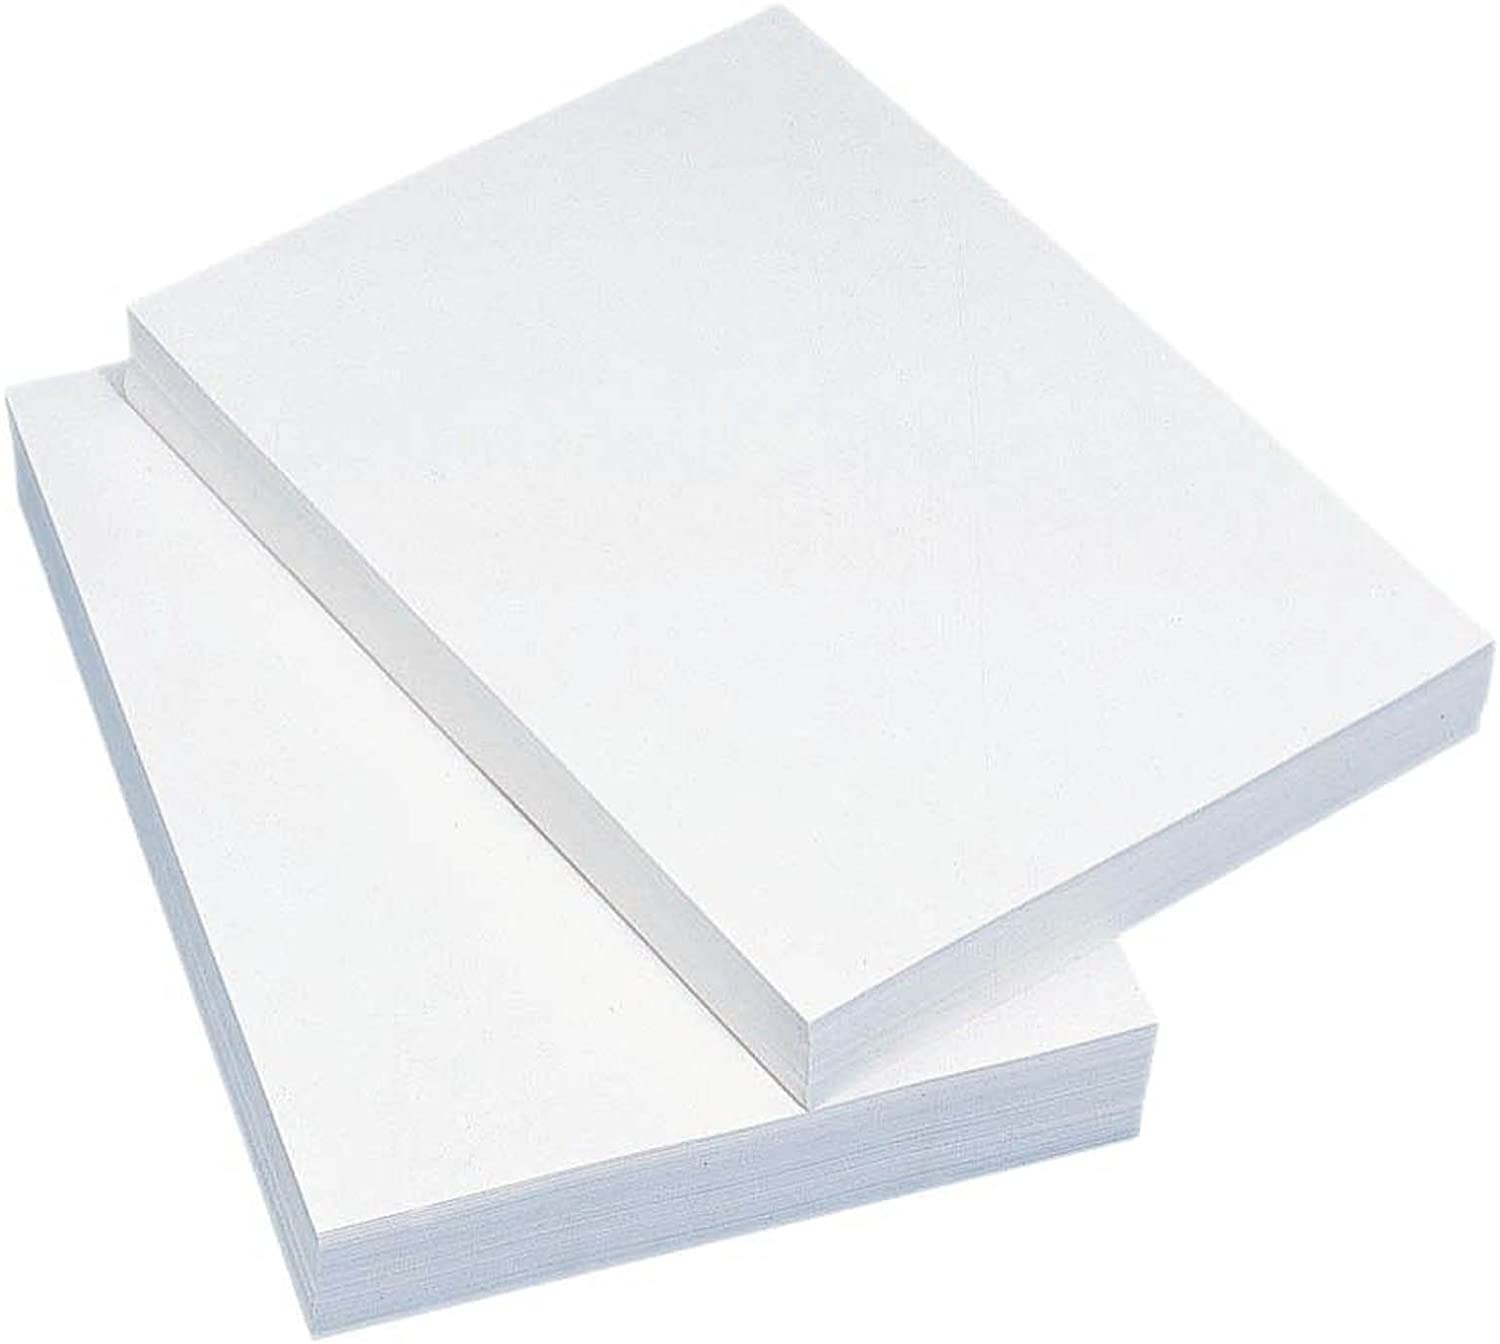 a4 paper multipurpose earth friendly copier paper